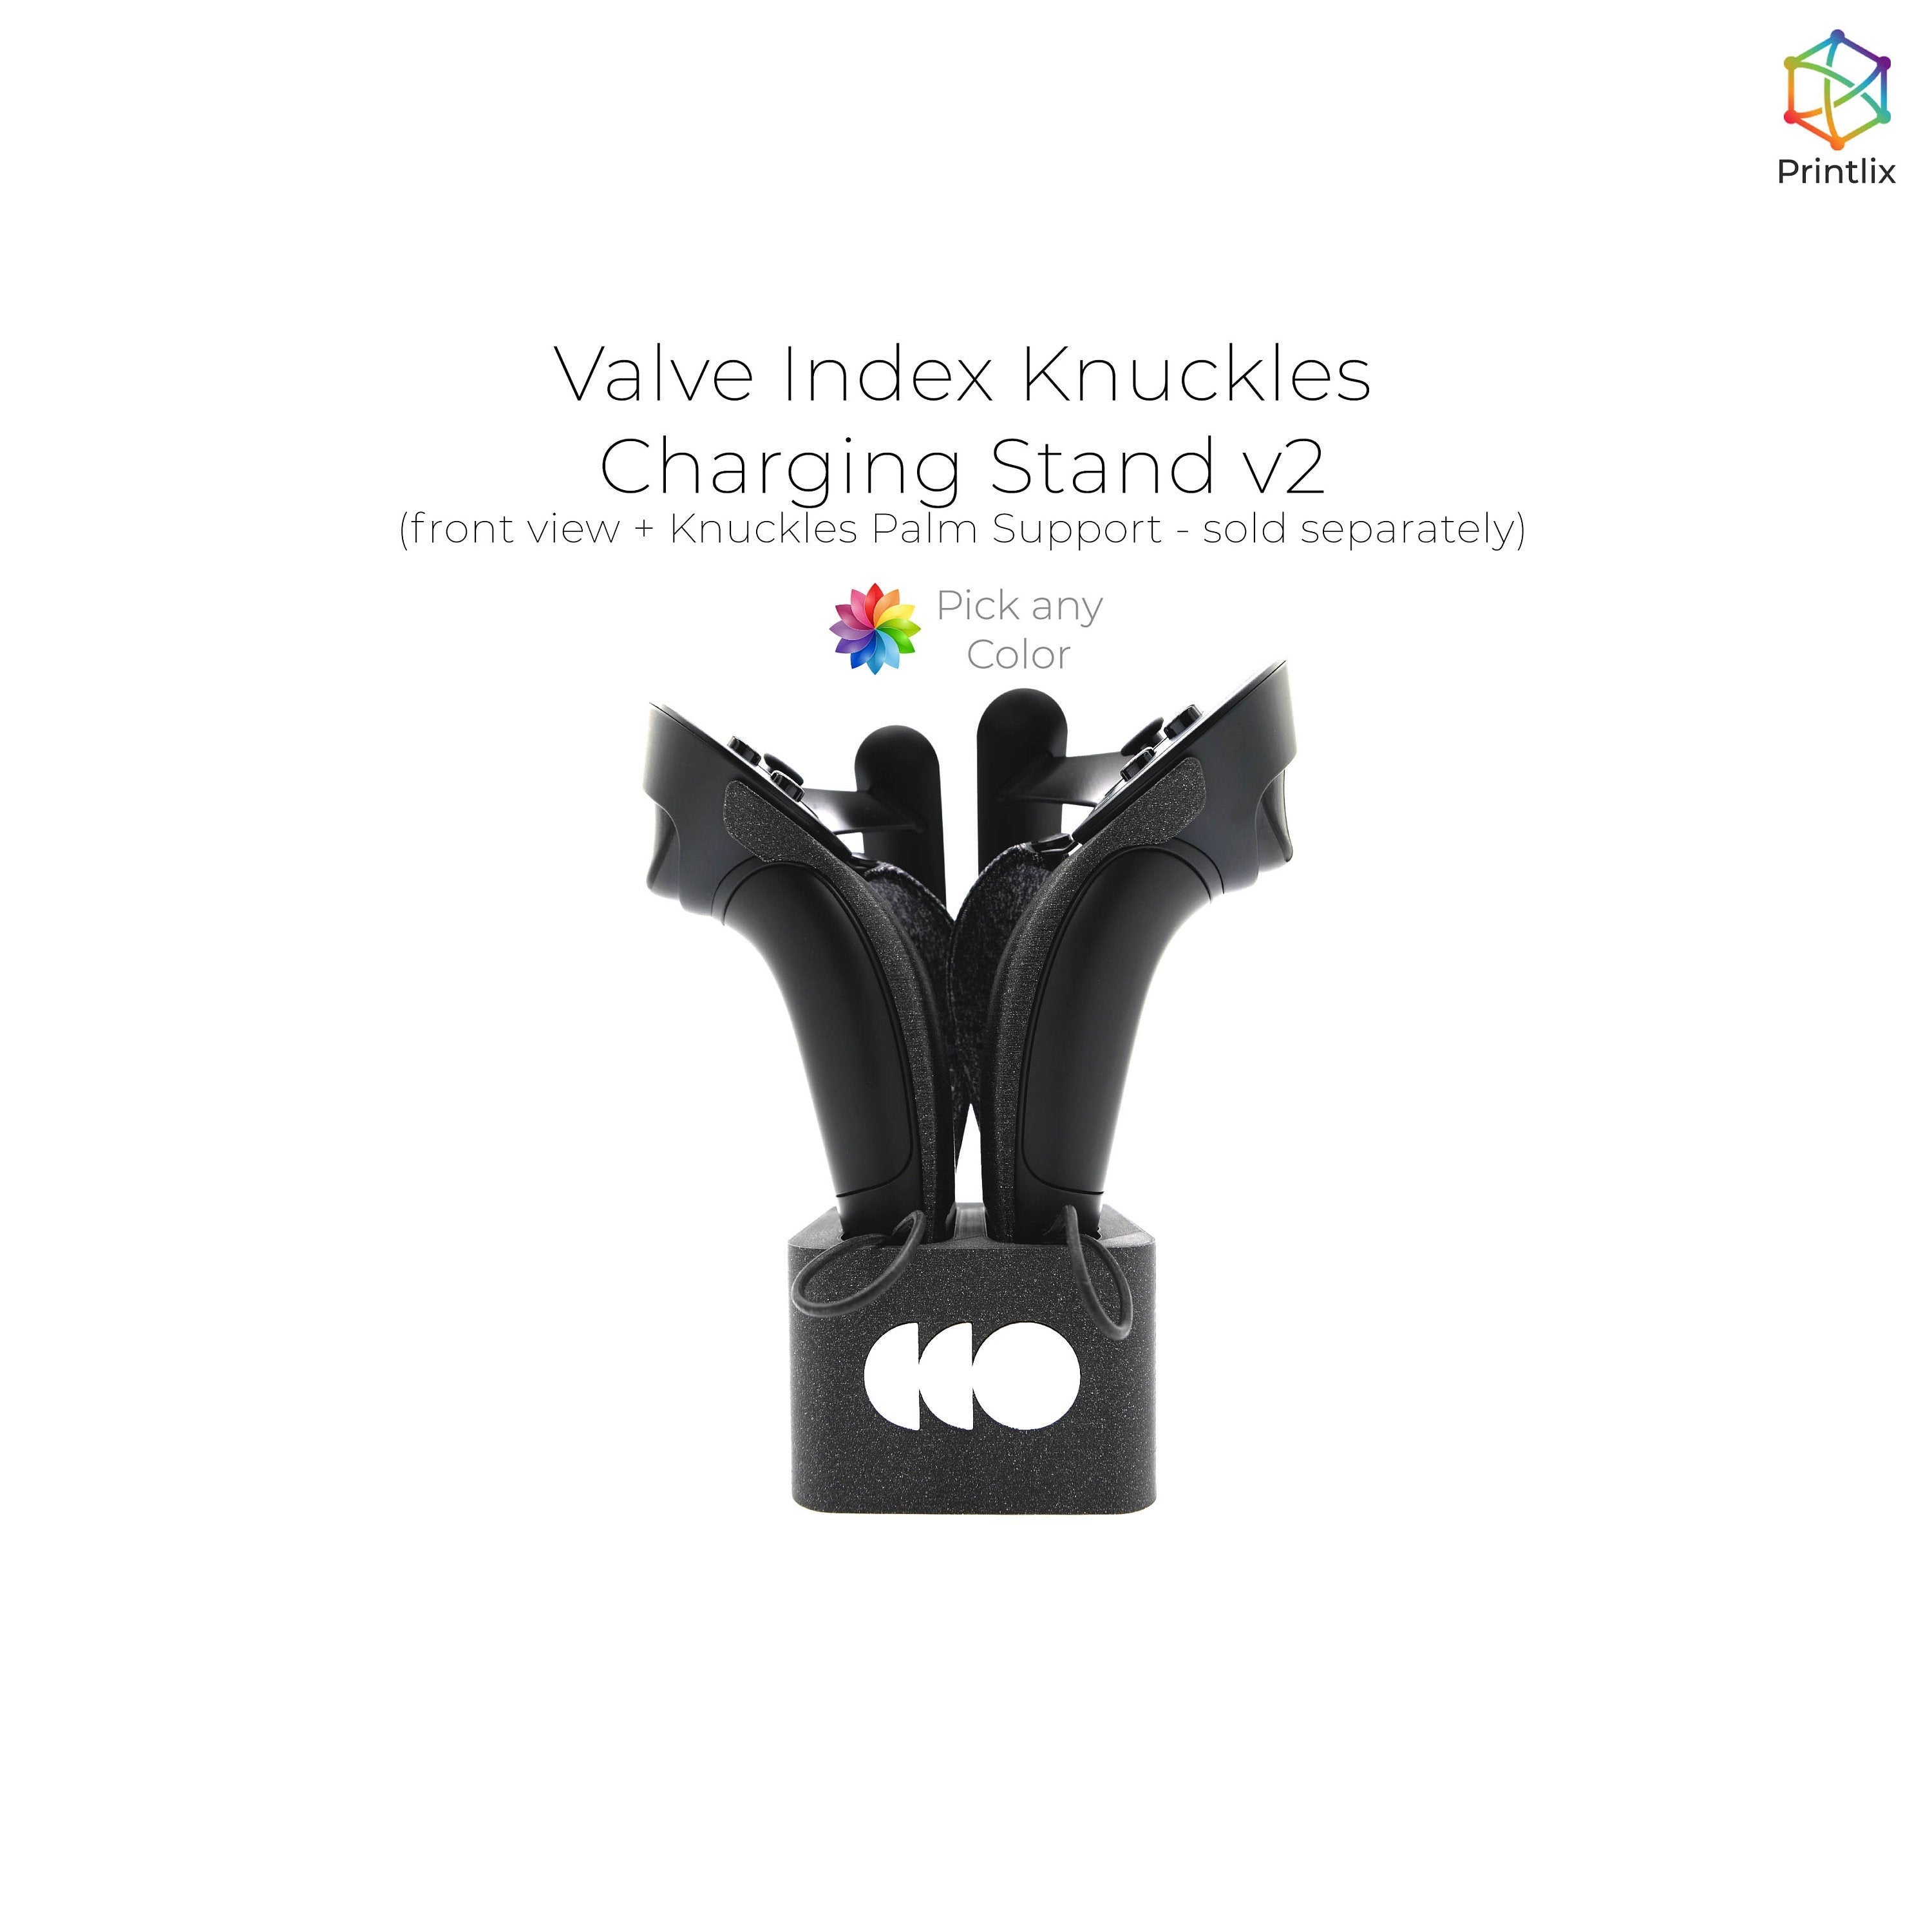 Valve Index Knuckles Cube Charging Stand V2